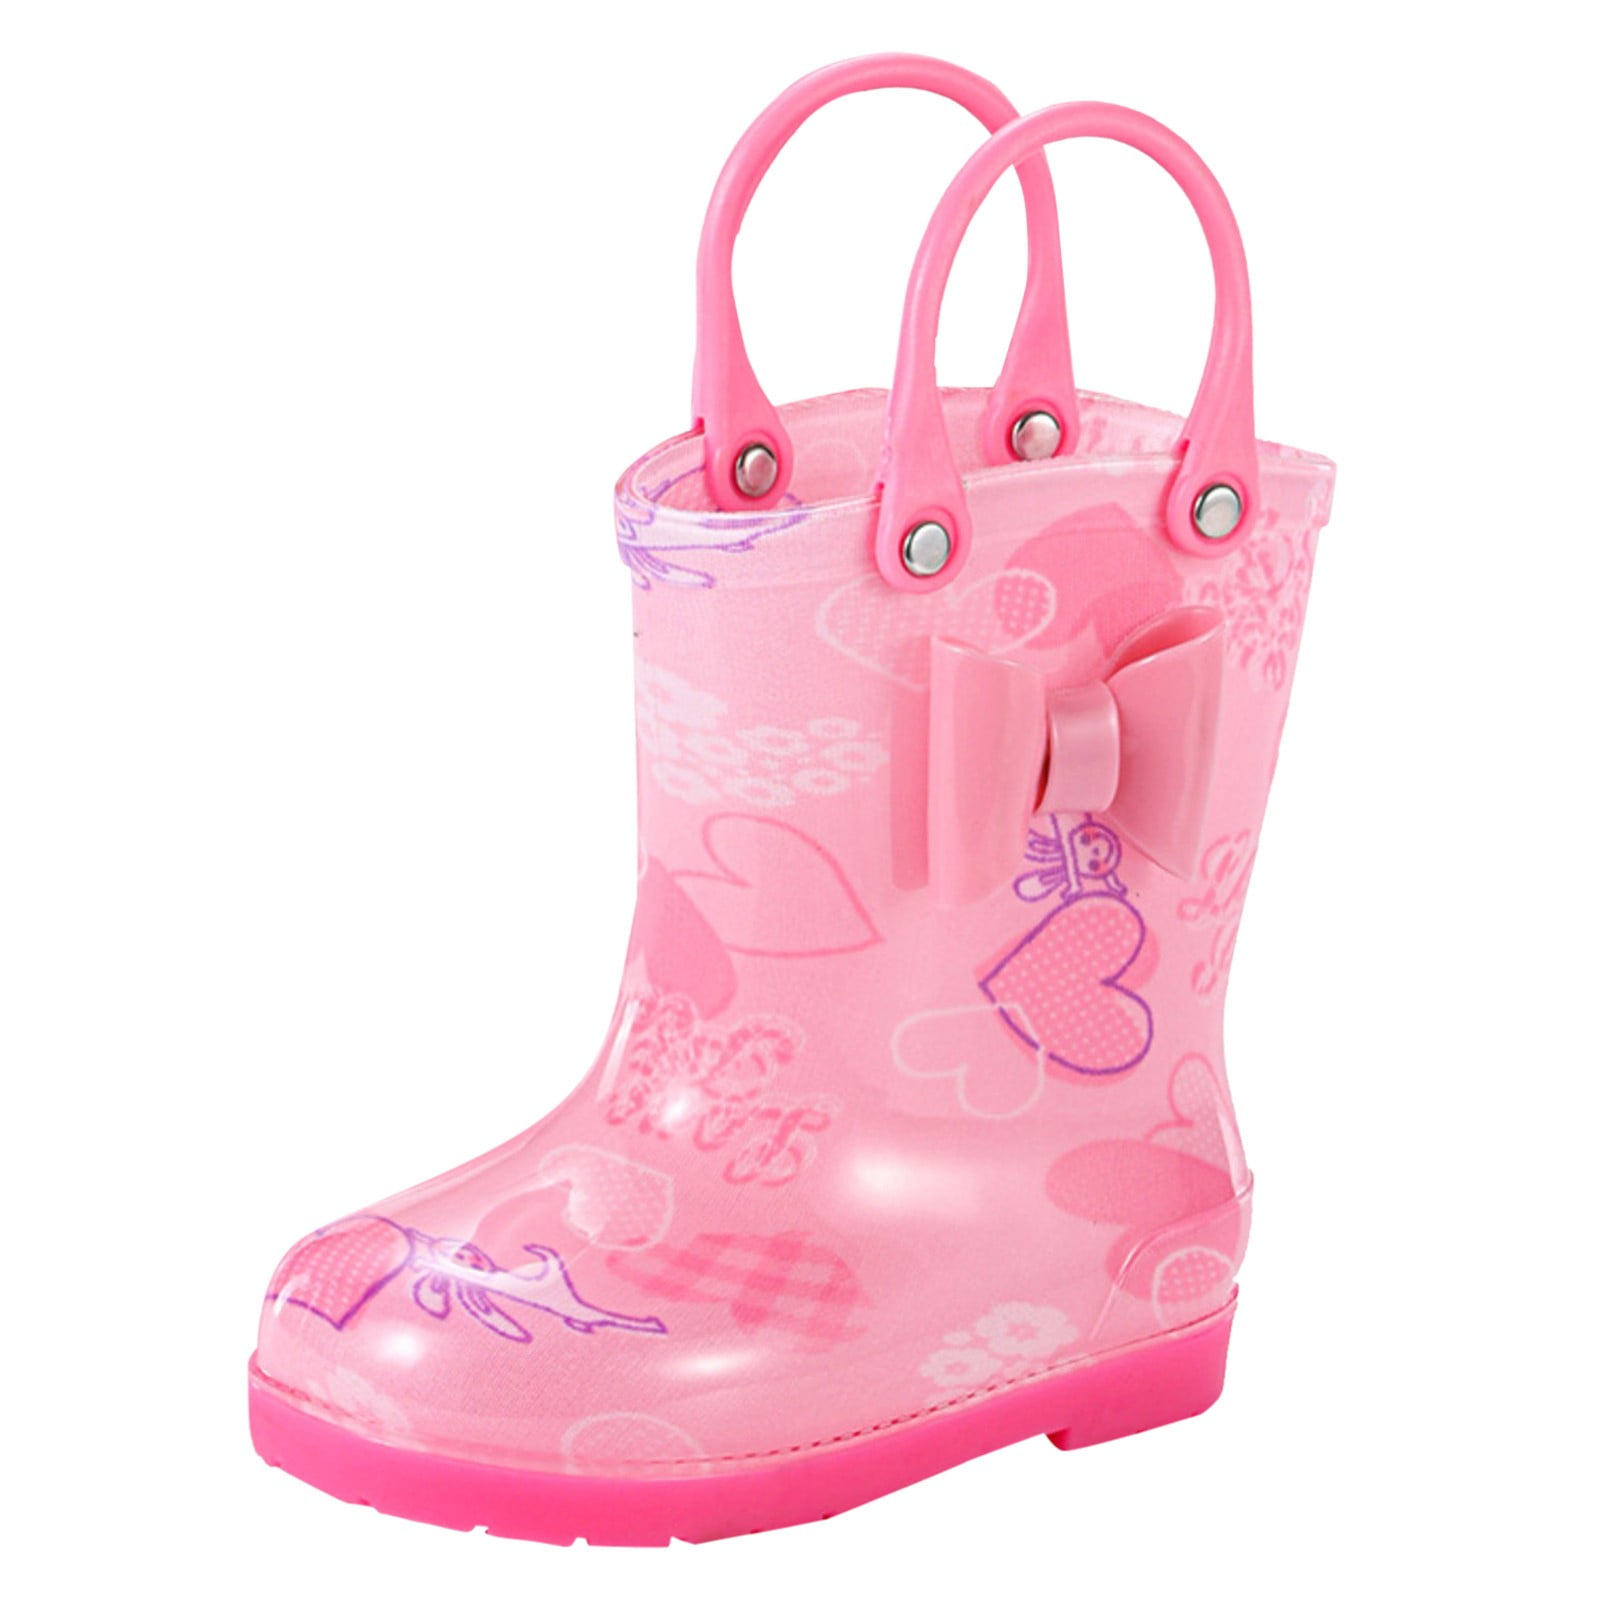 TOWED22 Kids Rain Boots for Girls Toddler Rain Boots Baby Rain Boots ...